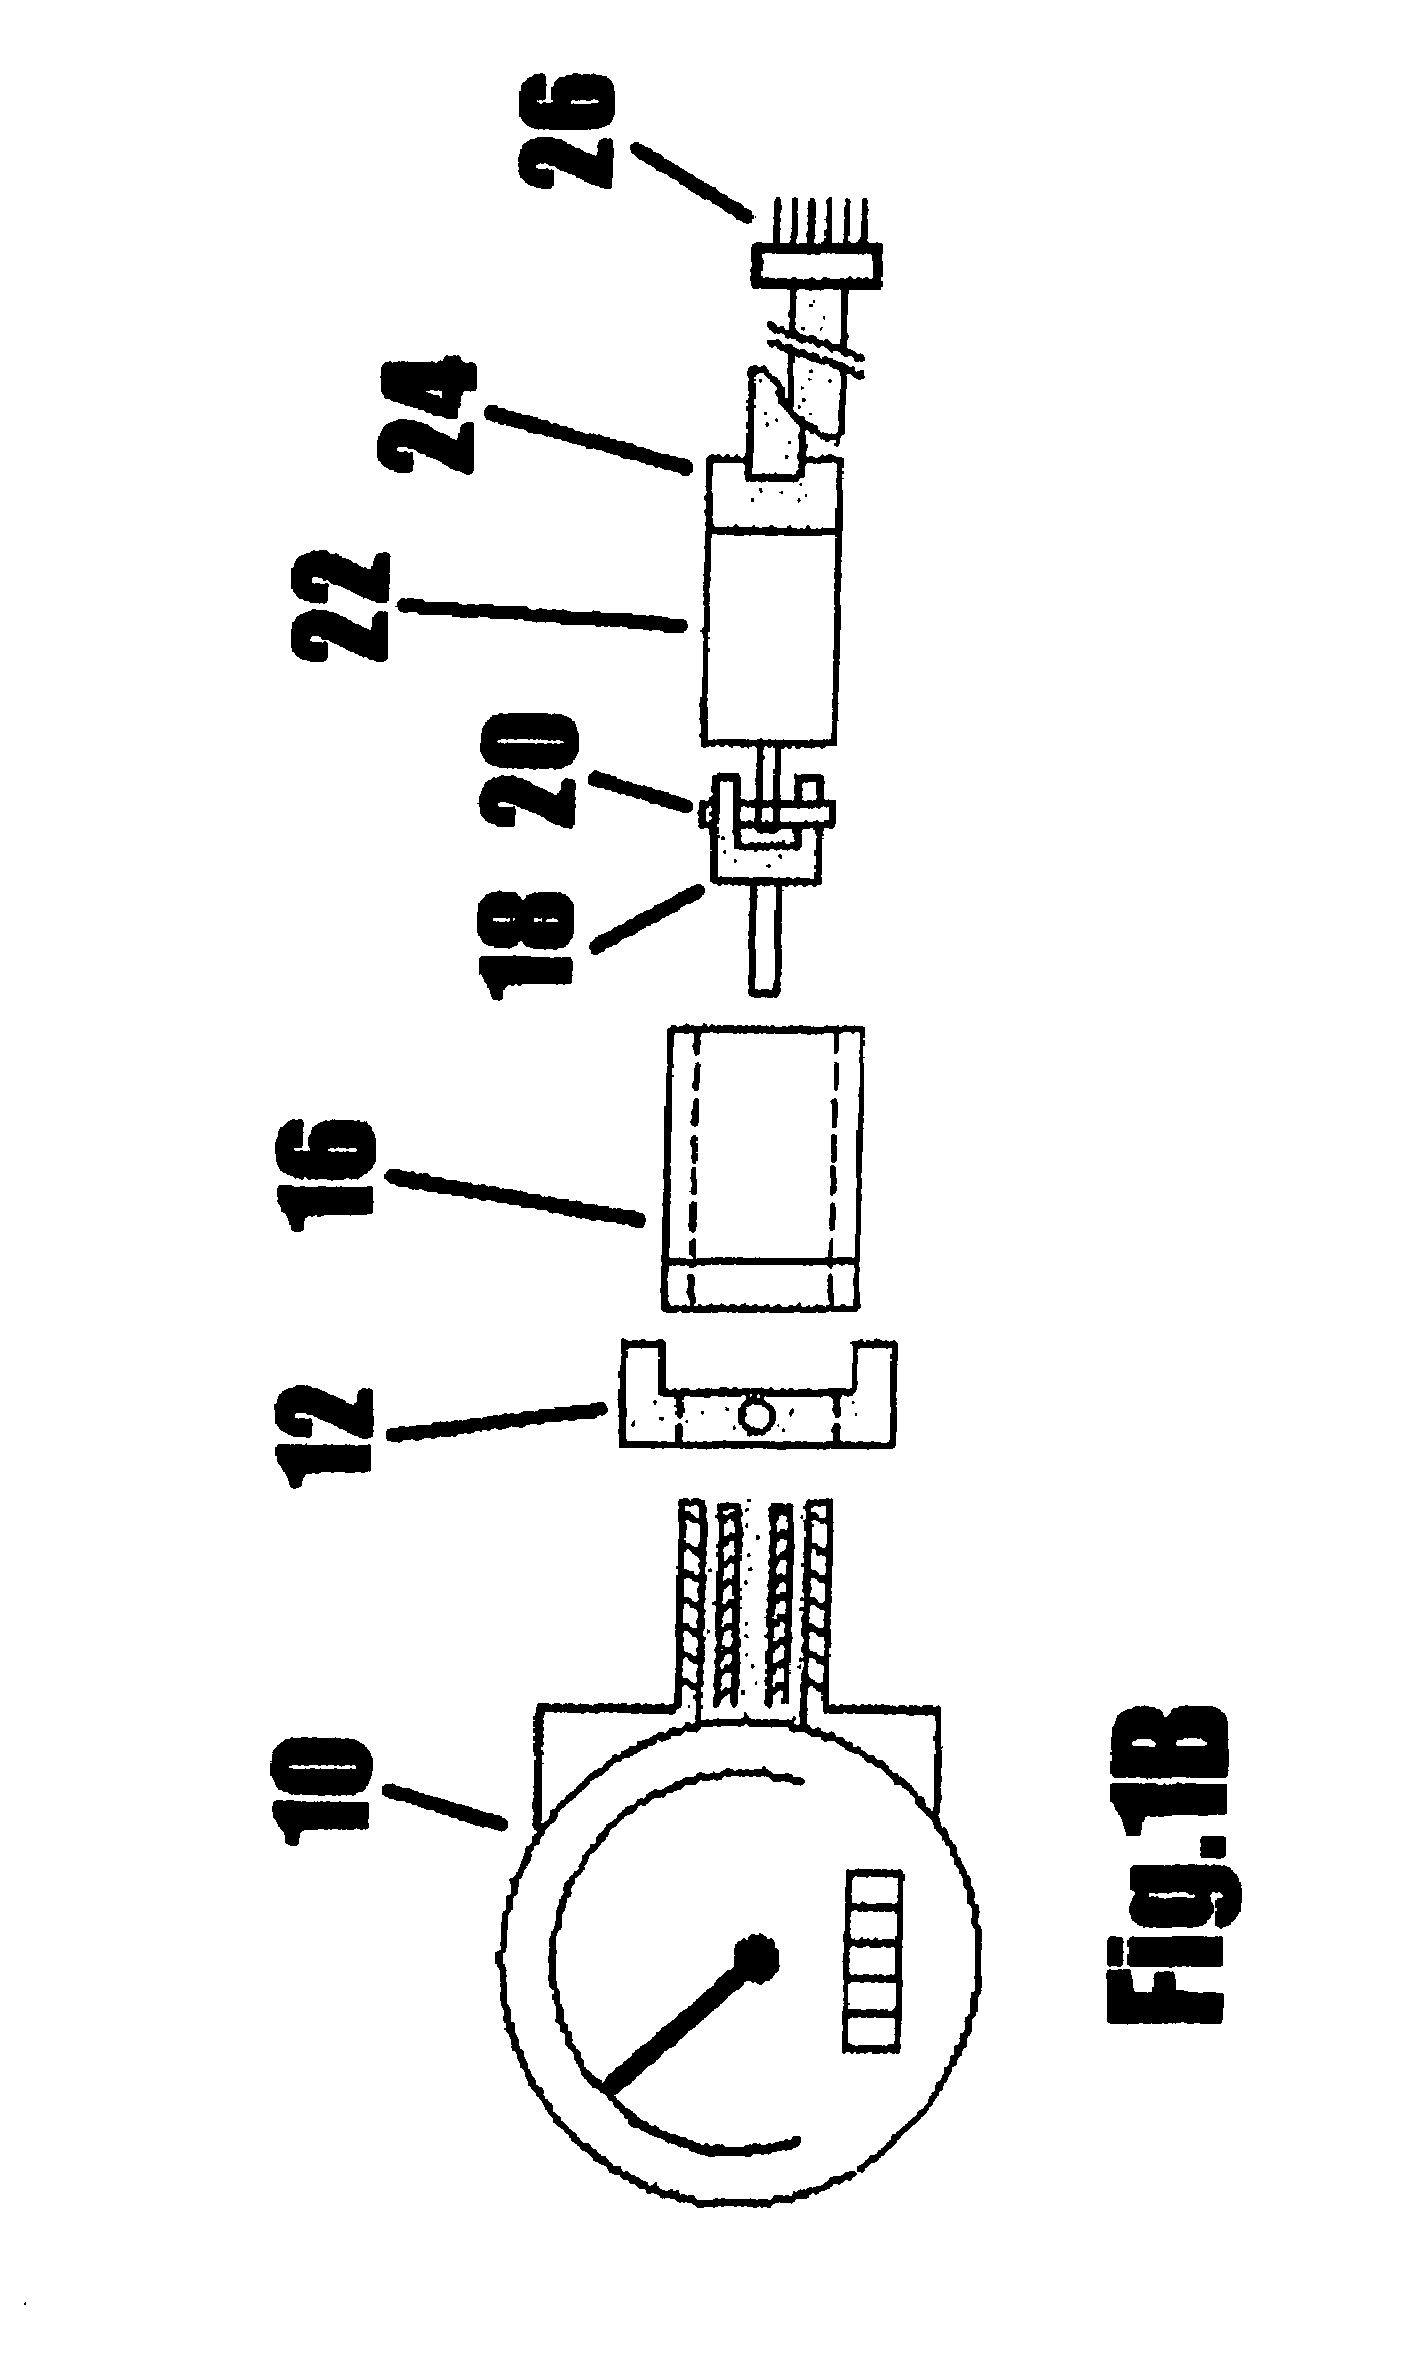 Speedometer drive apparatus and method